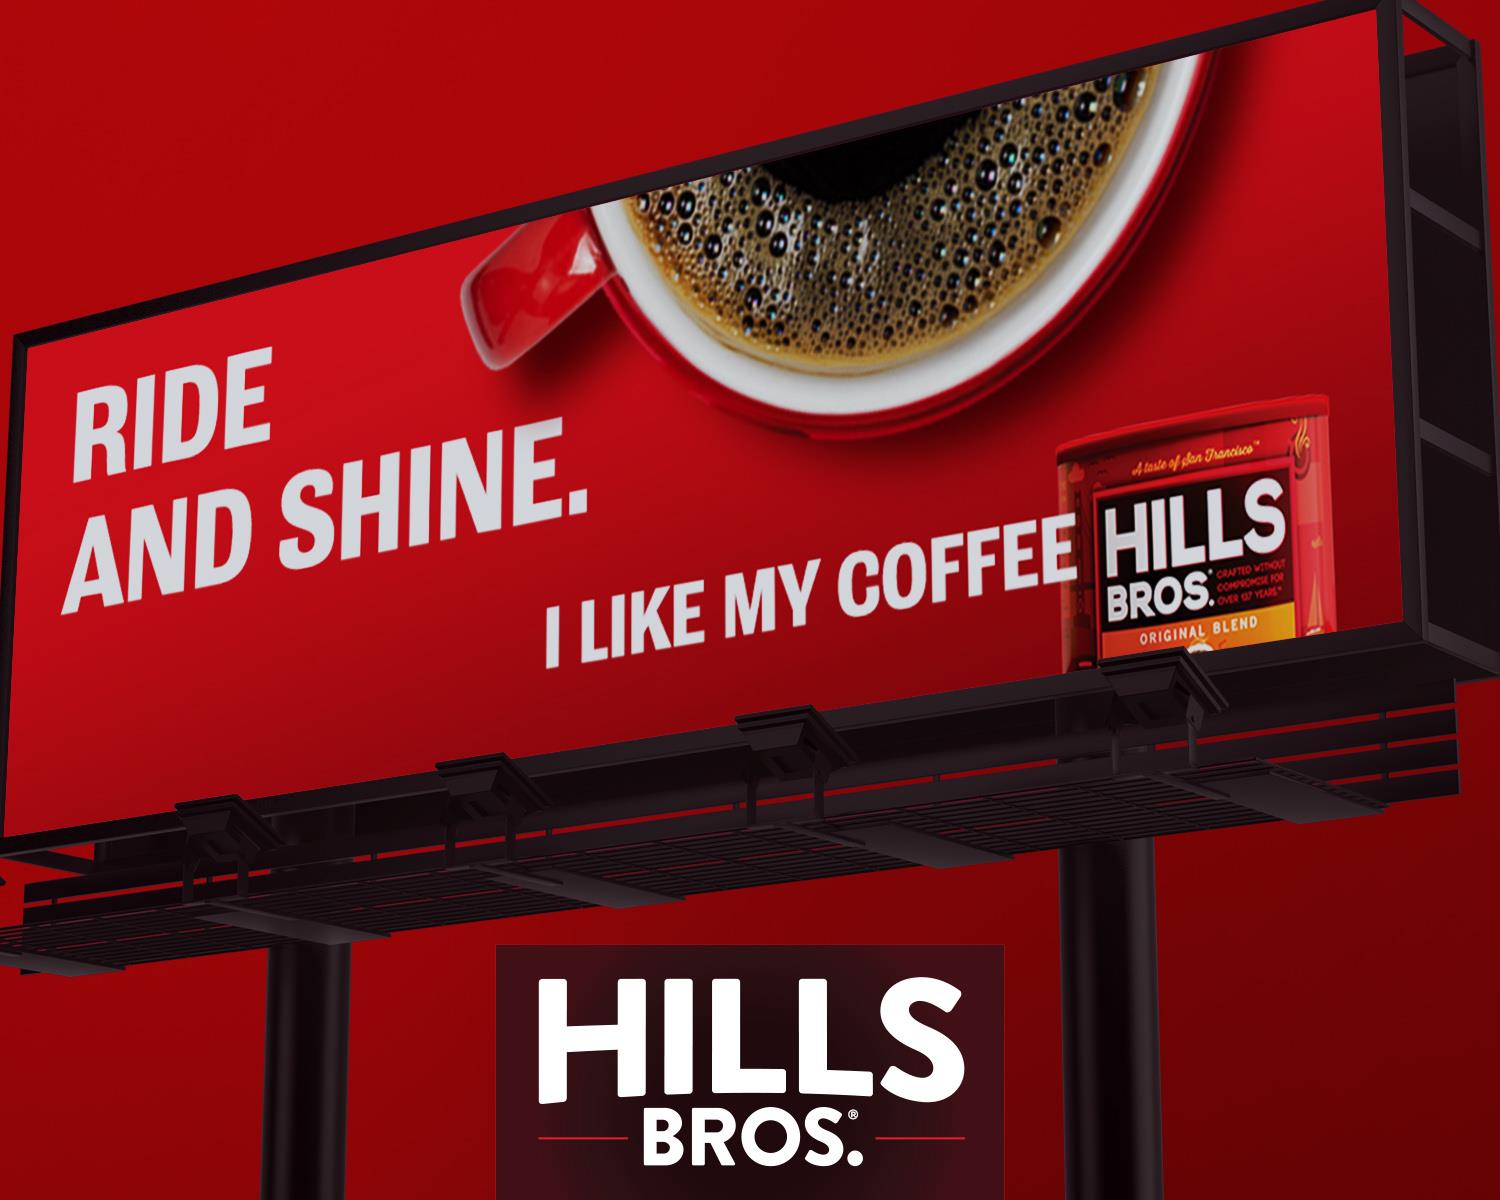 HILLS BROS. COFFEE: It